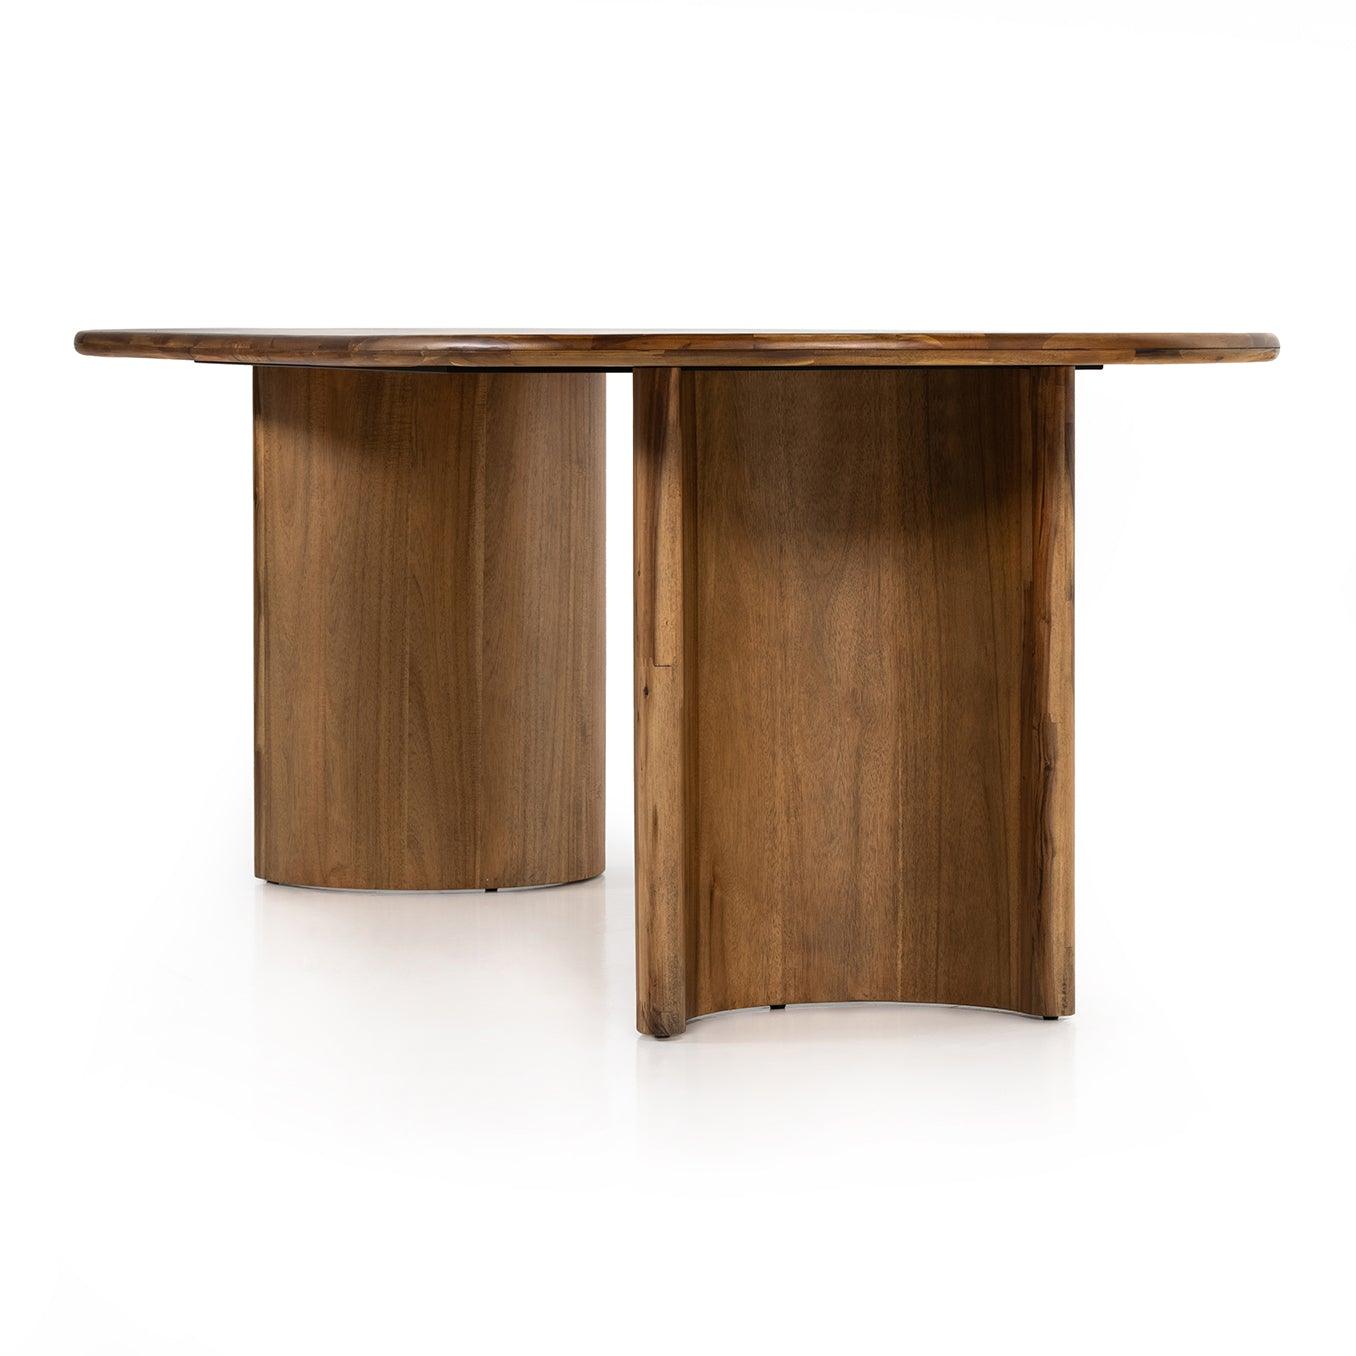 Paden Acacia Dining Table, Sandy Acacia - Reimagine Designs - dining table, new